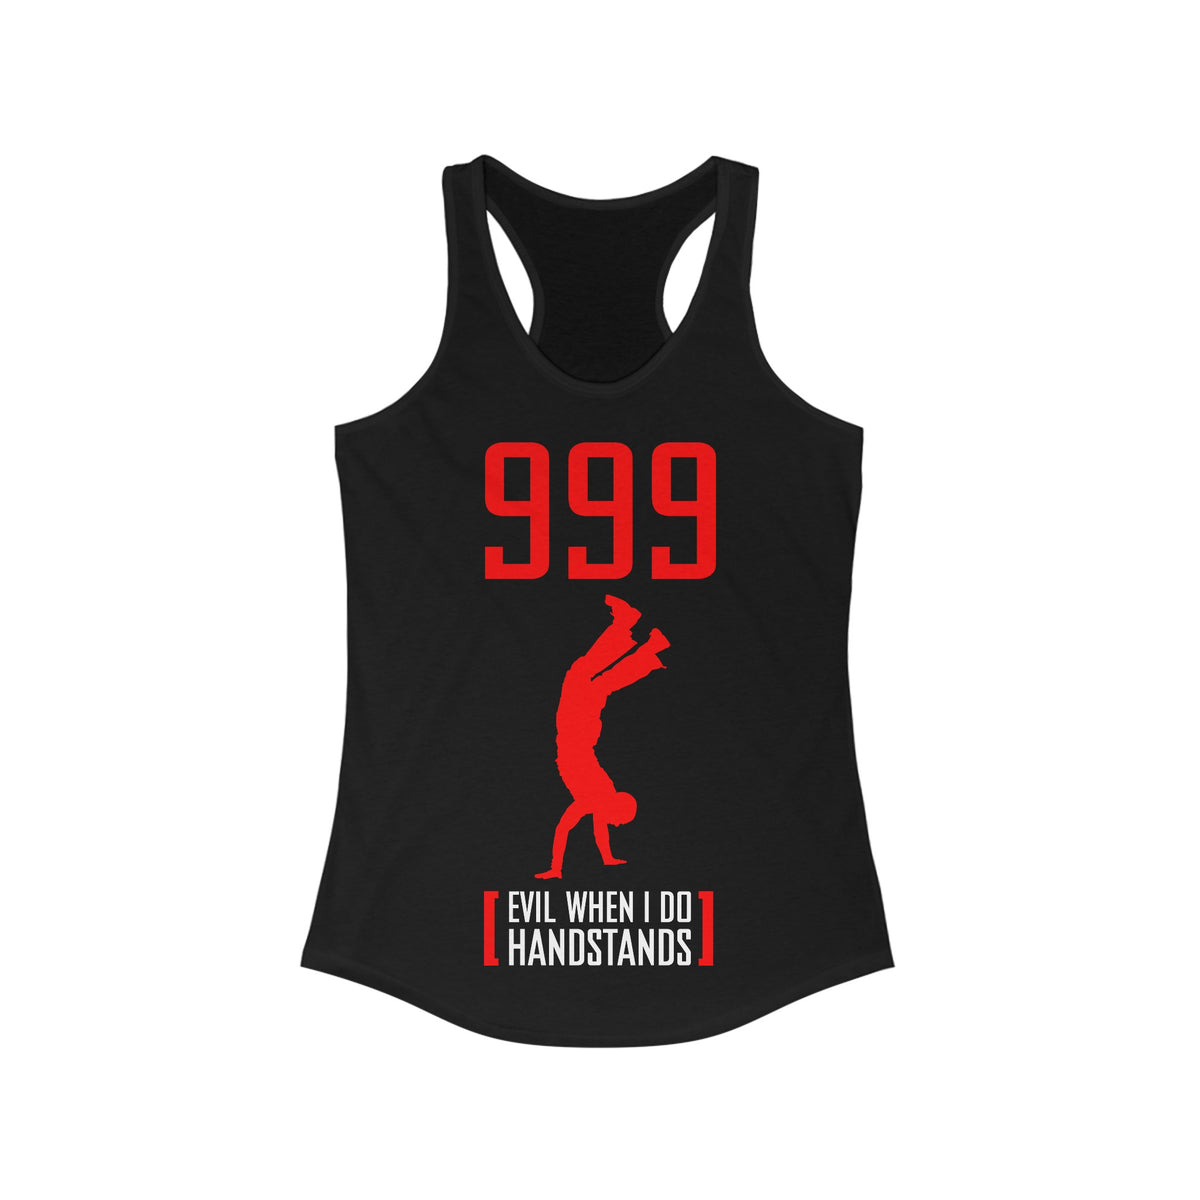 999 - Evil When I Do Handstands  - Women’s Racerback Tank